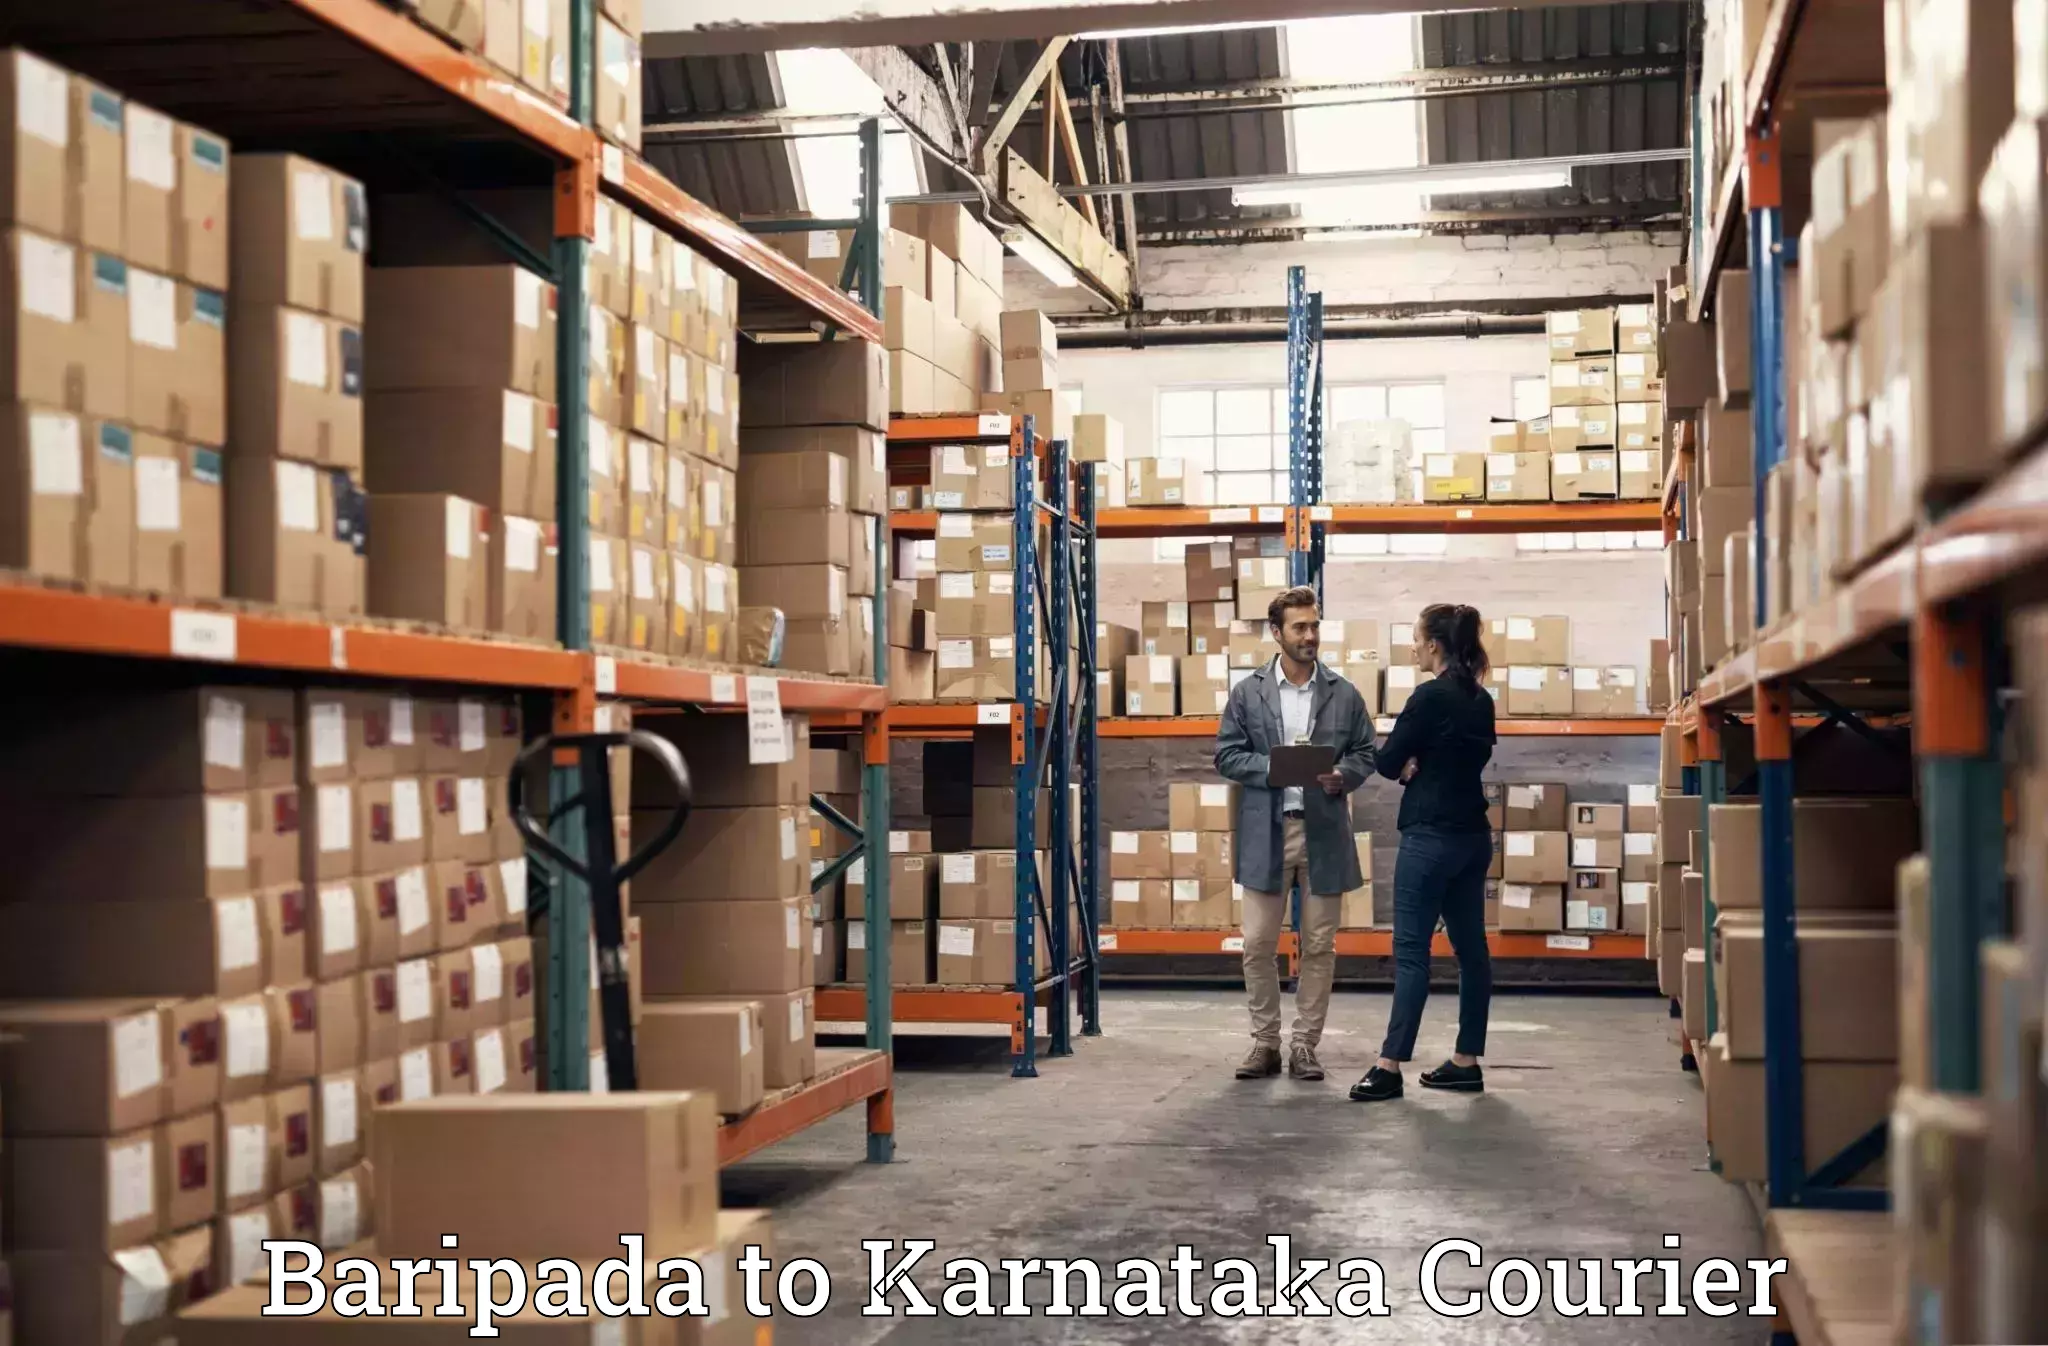 Professional moving company Baripada to Laxmeshwar